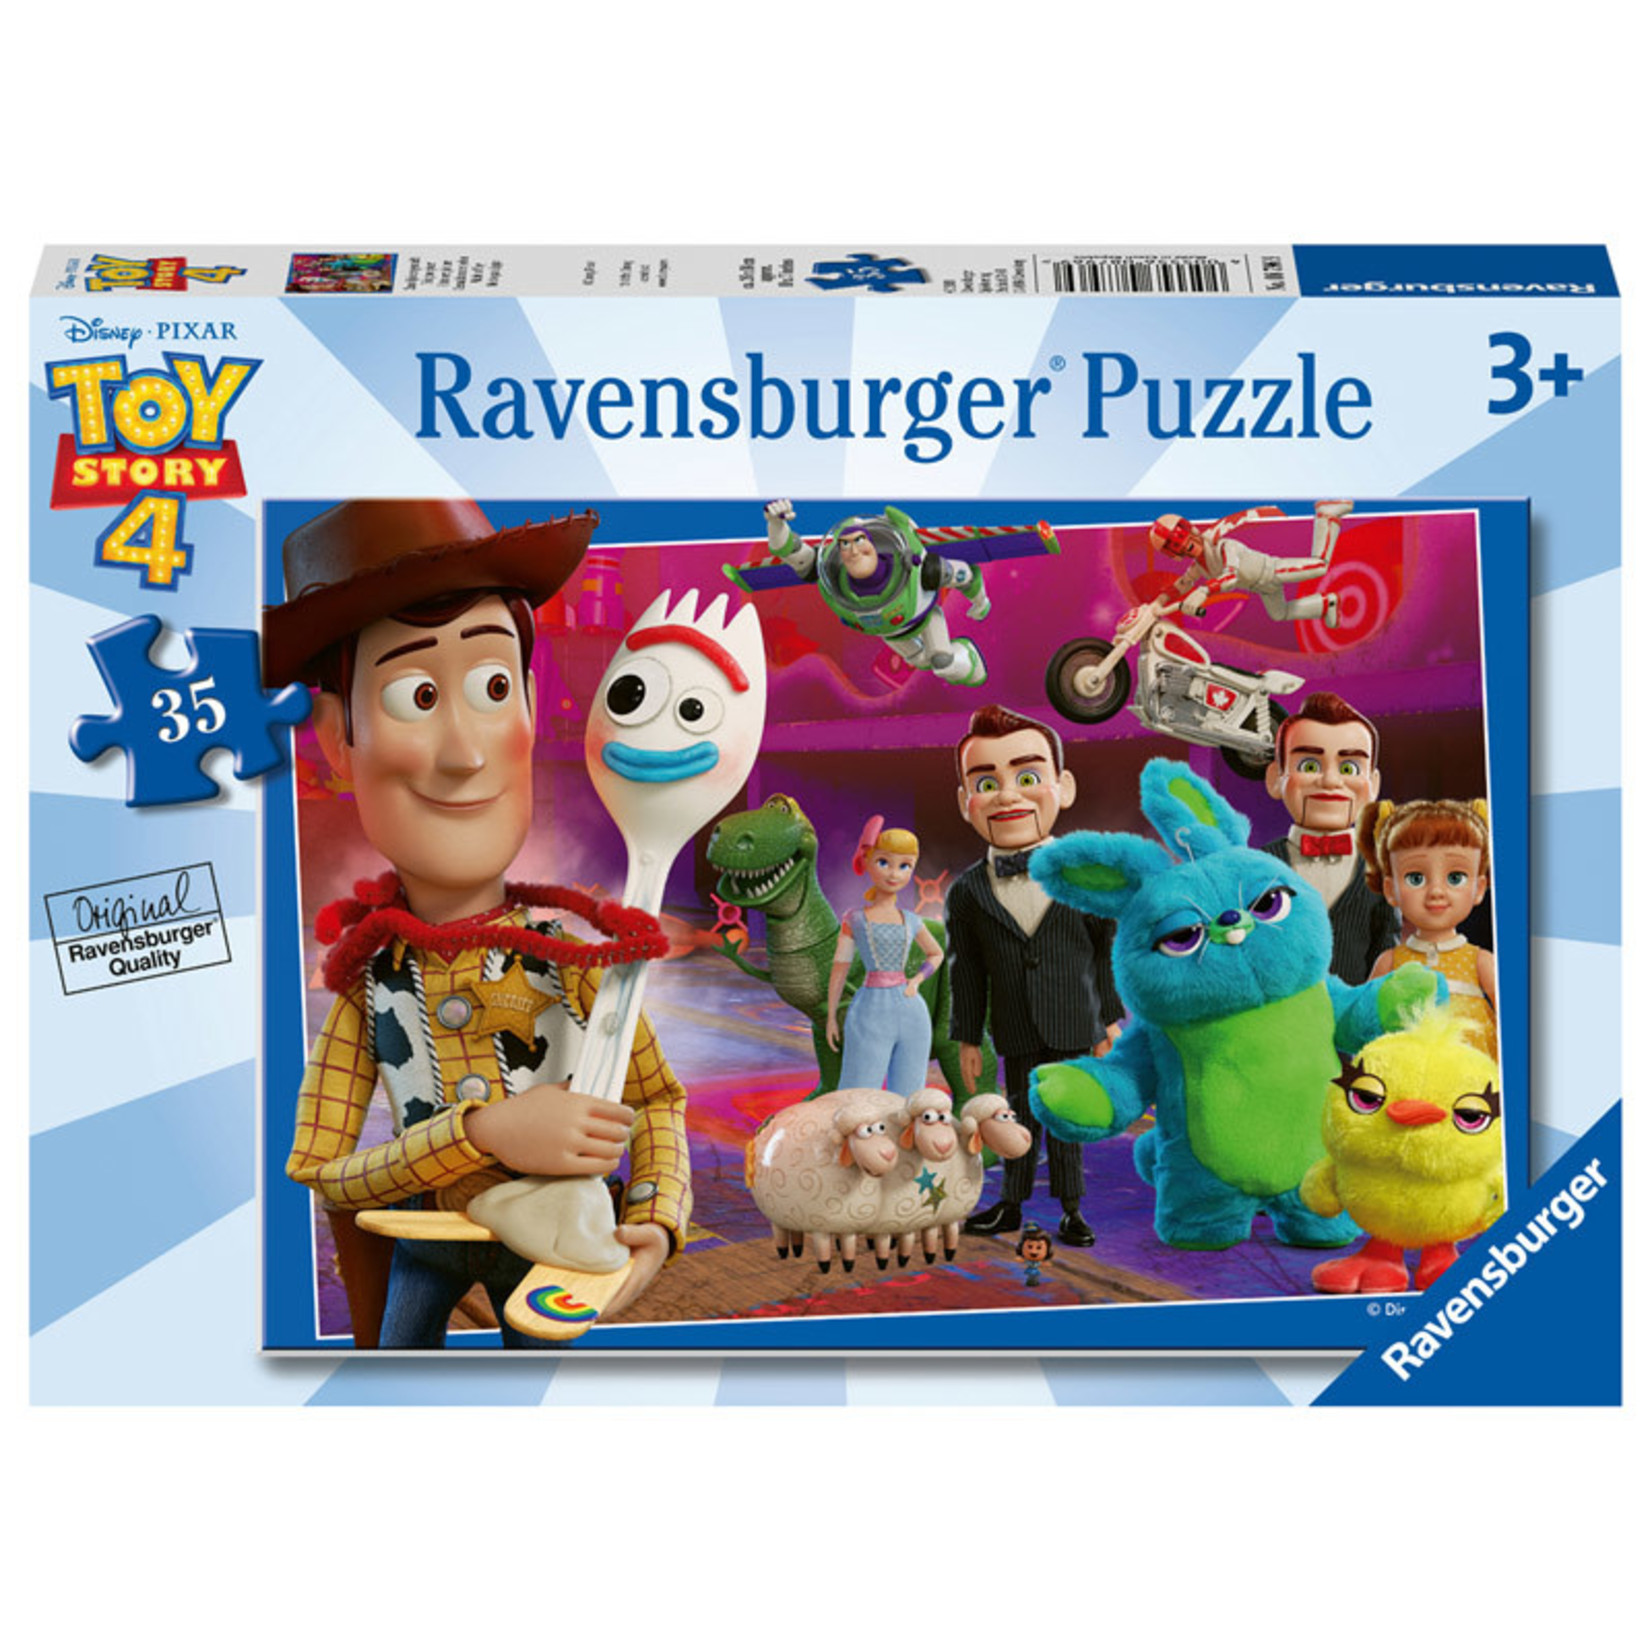 Ravensburger Toy Story 35pc